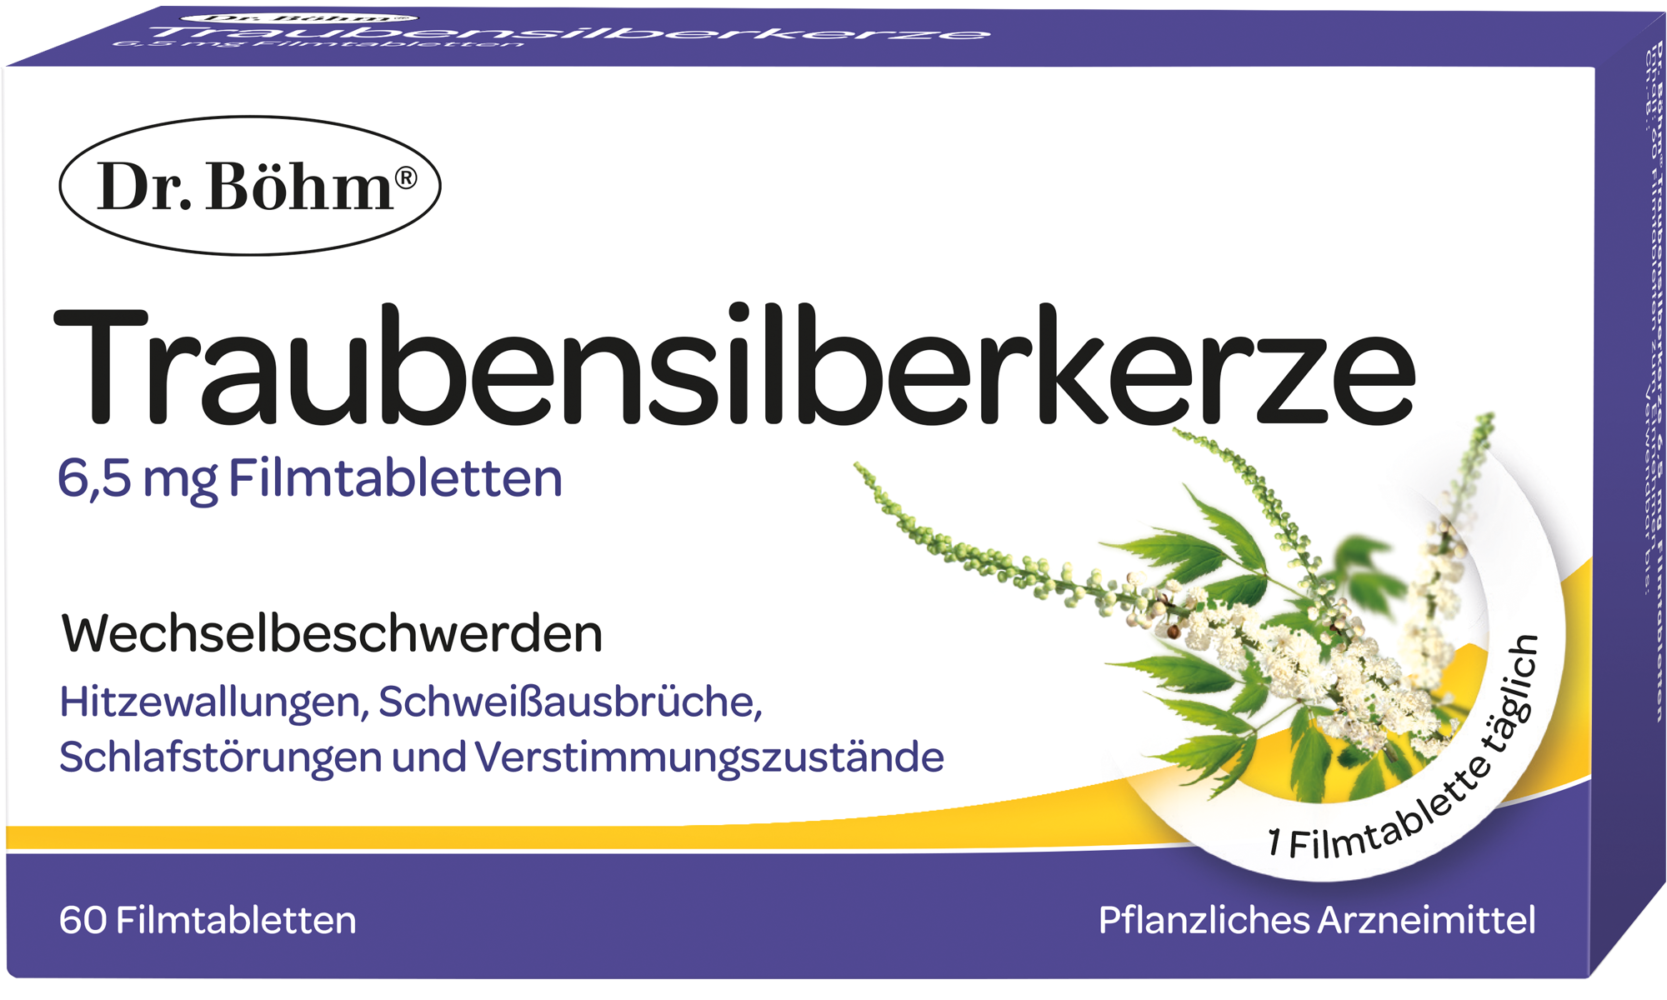 Dr. Böhm® Traubensilberkerze 6,5 mg Filmtabletten; Wechselbeschwerden